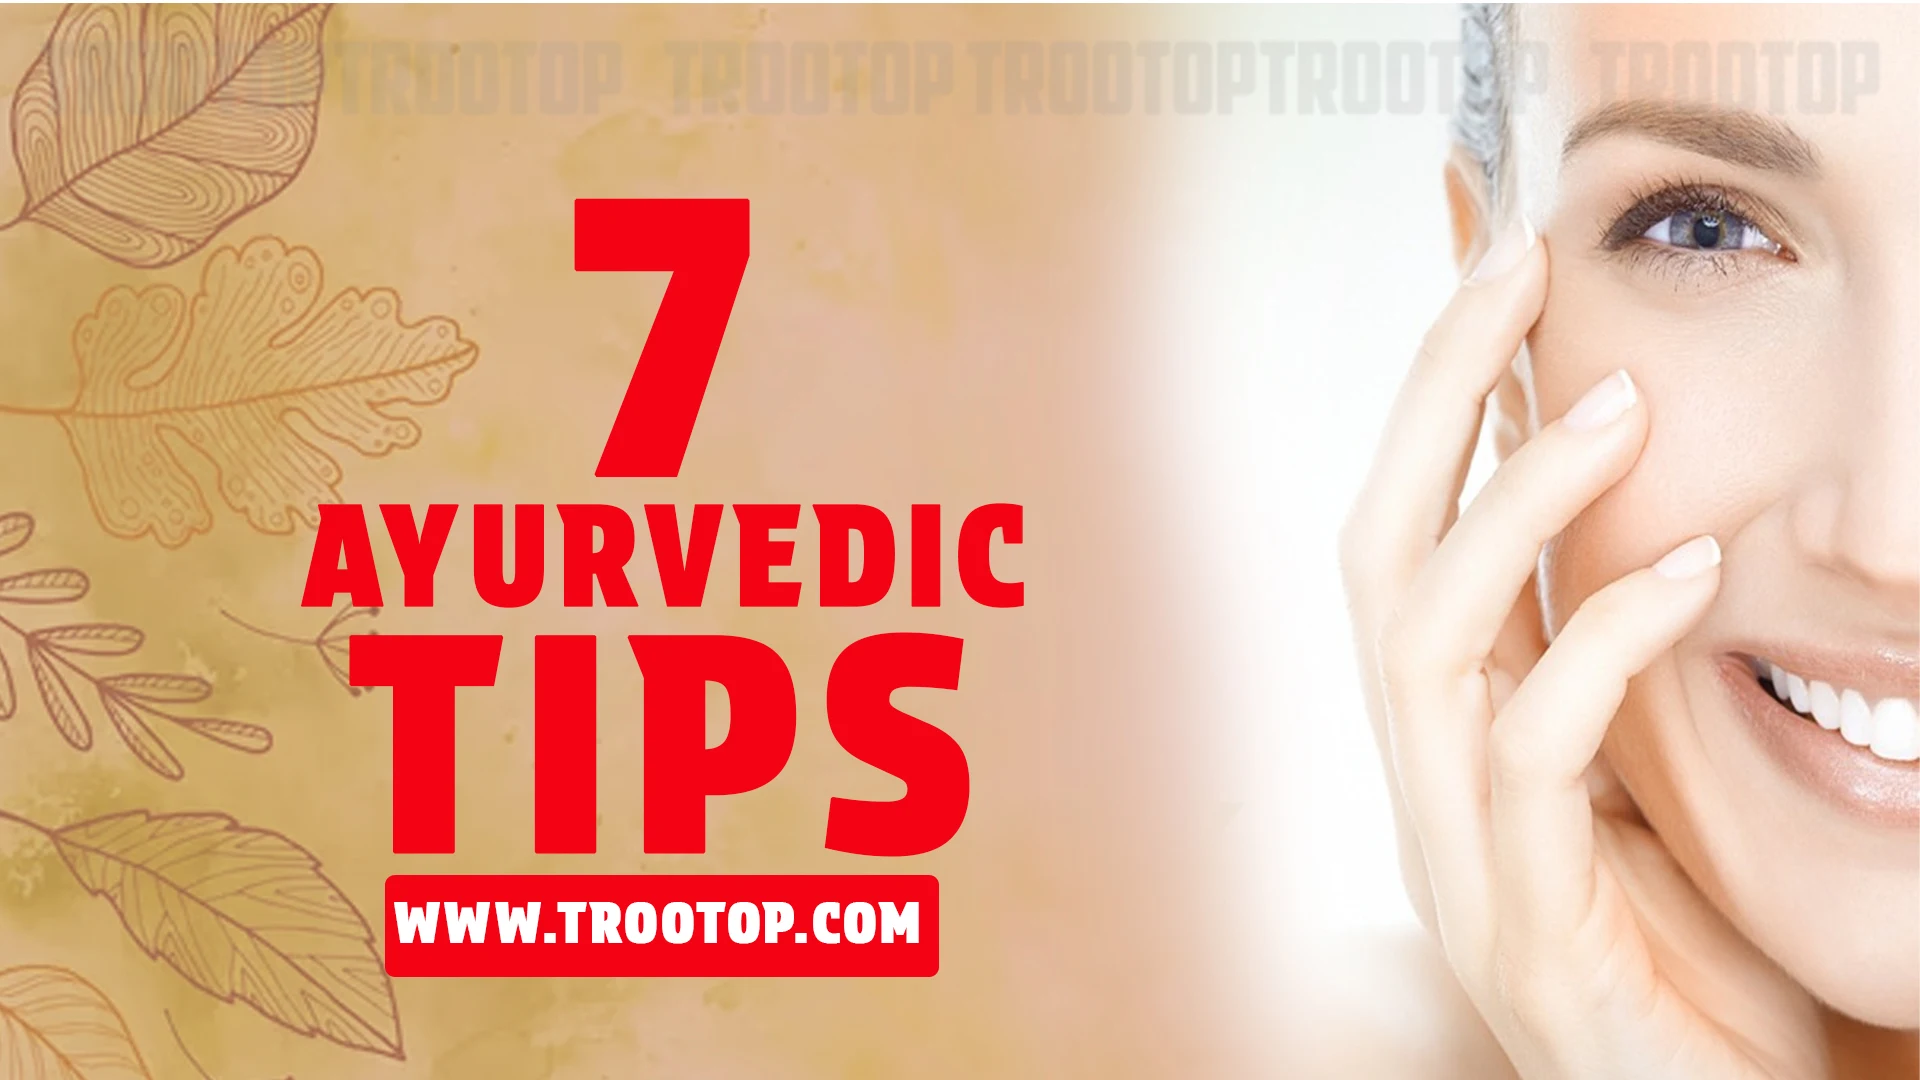 Wellhealth Ayurvedic Tips